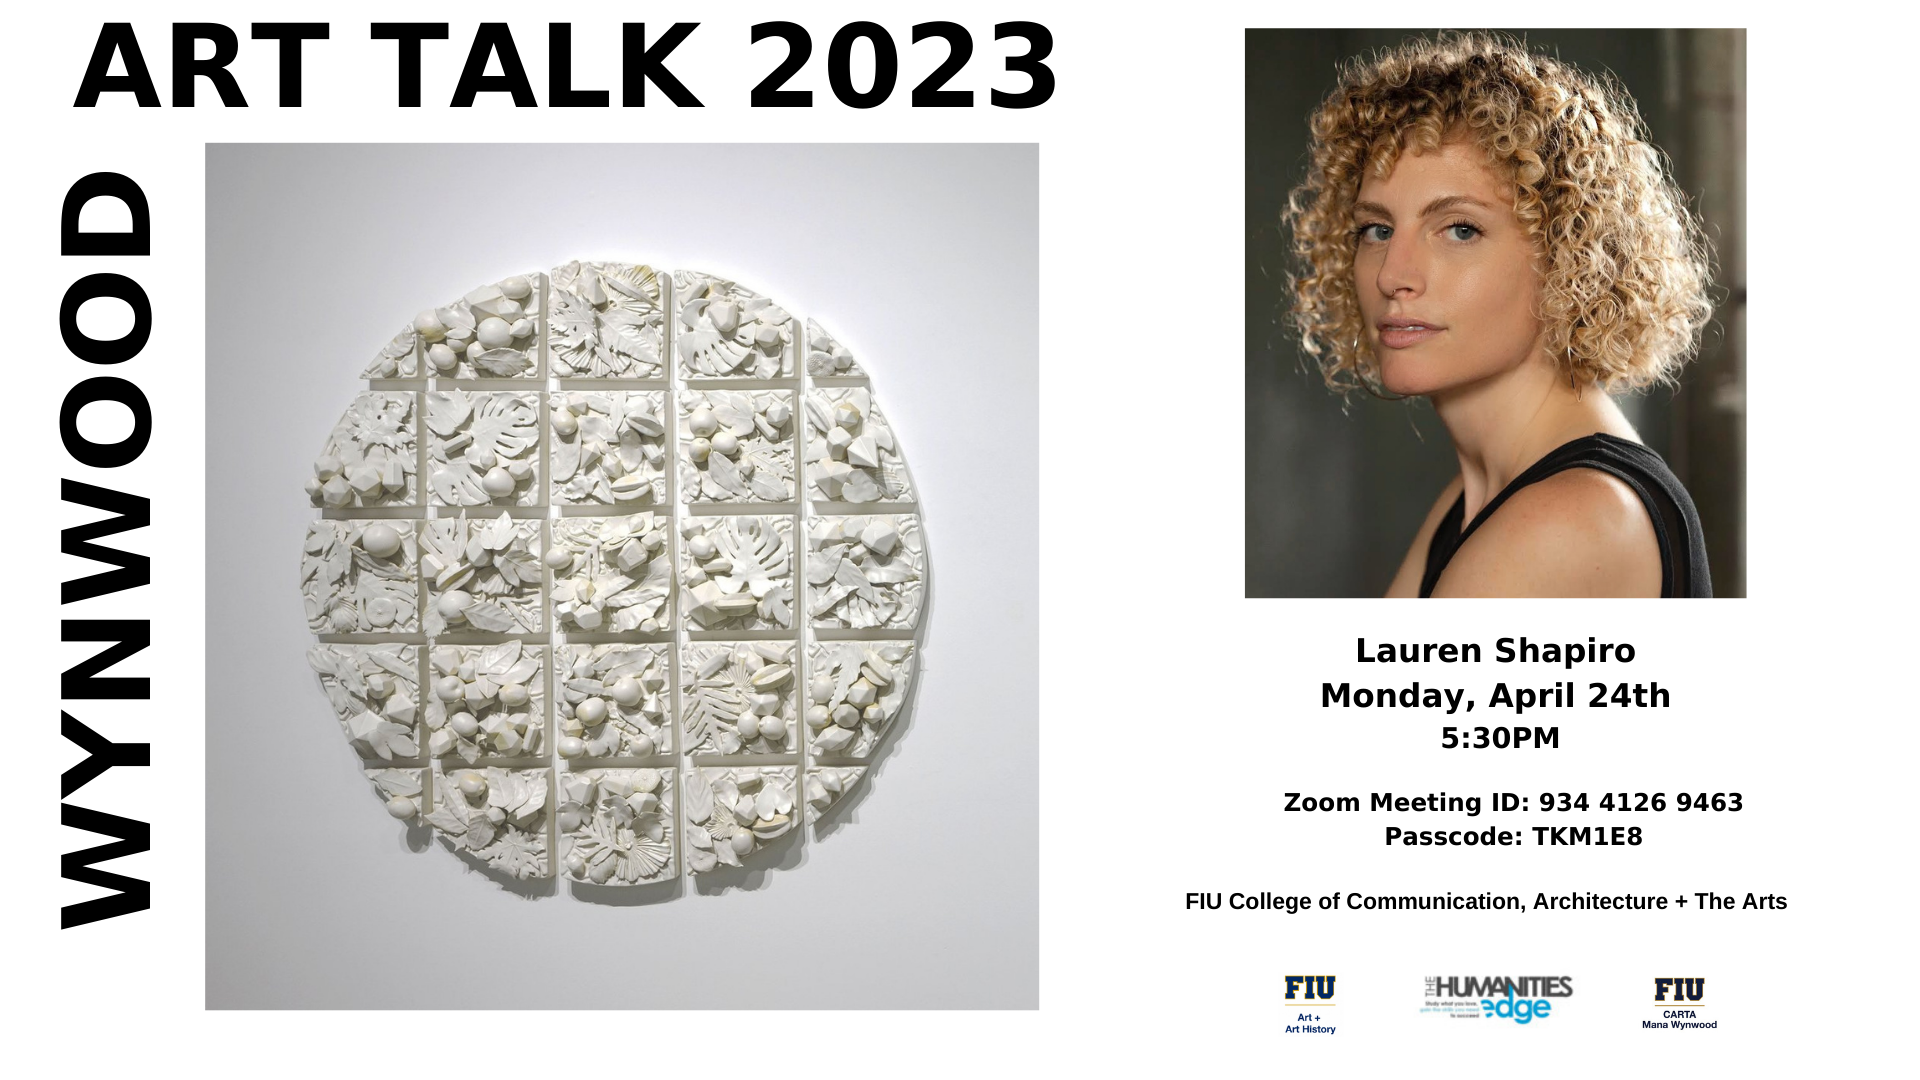 Lauren Shapiro Wynwood Art talk flyer